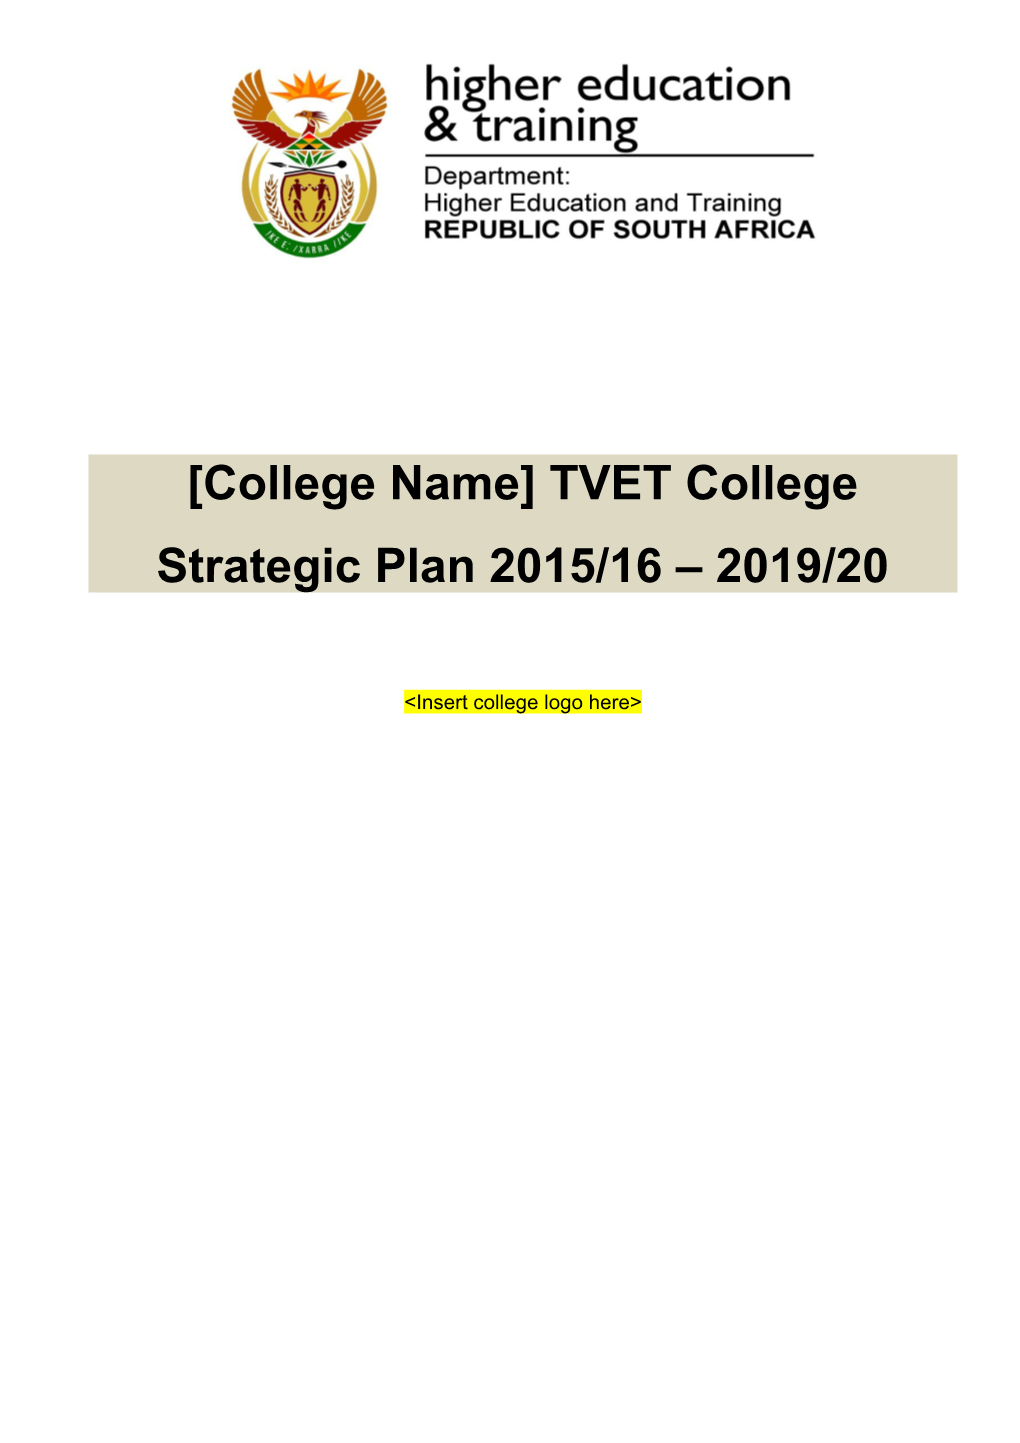 College Name TVET College Strategic Plan 2015/16 2019/20